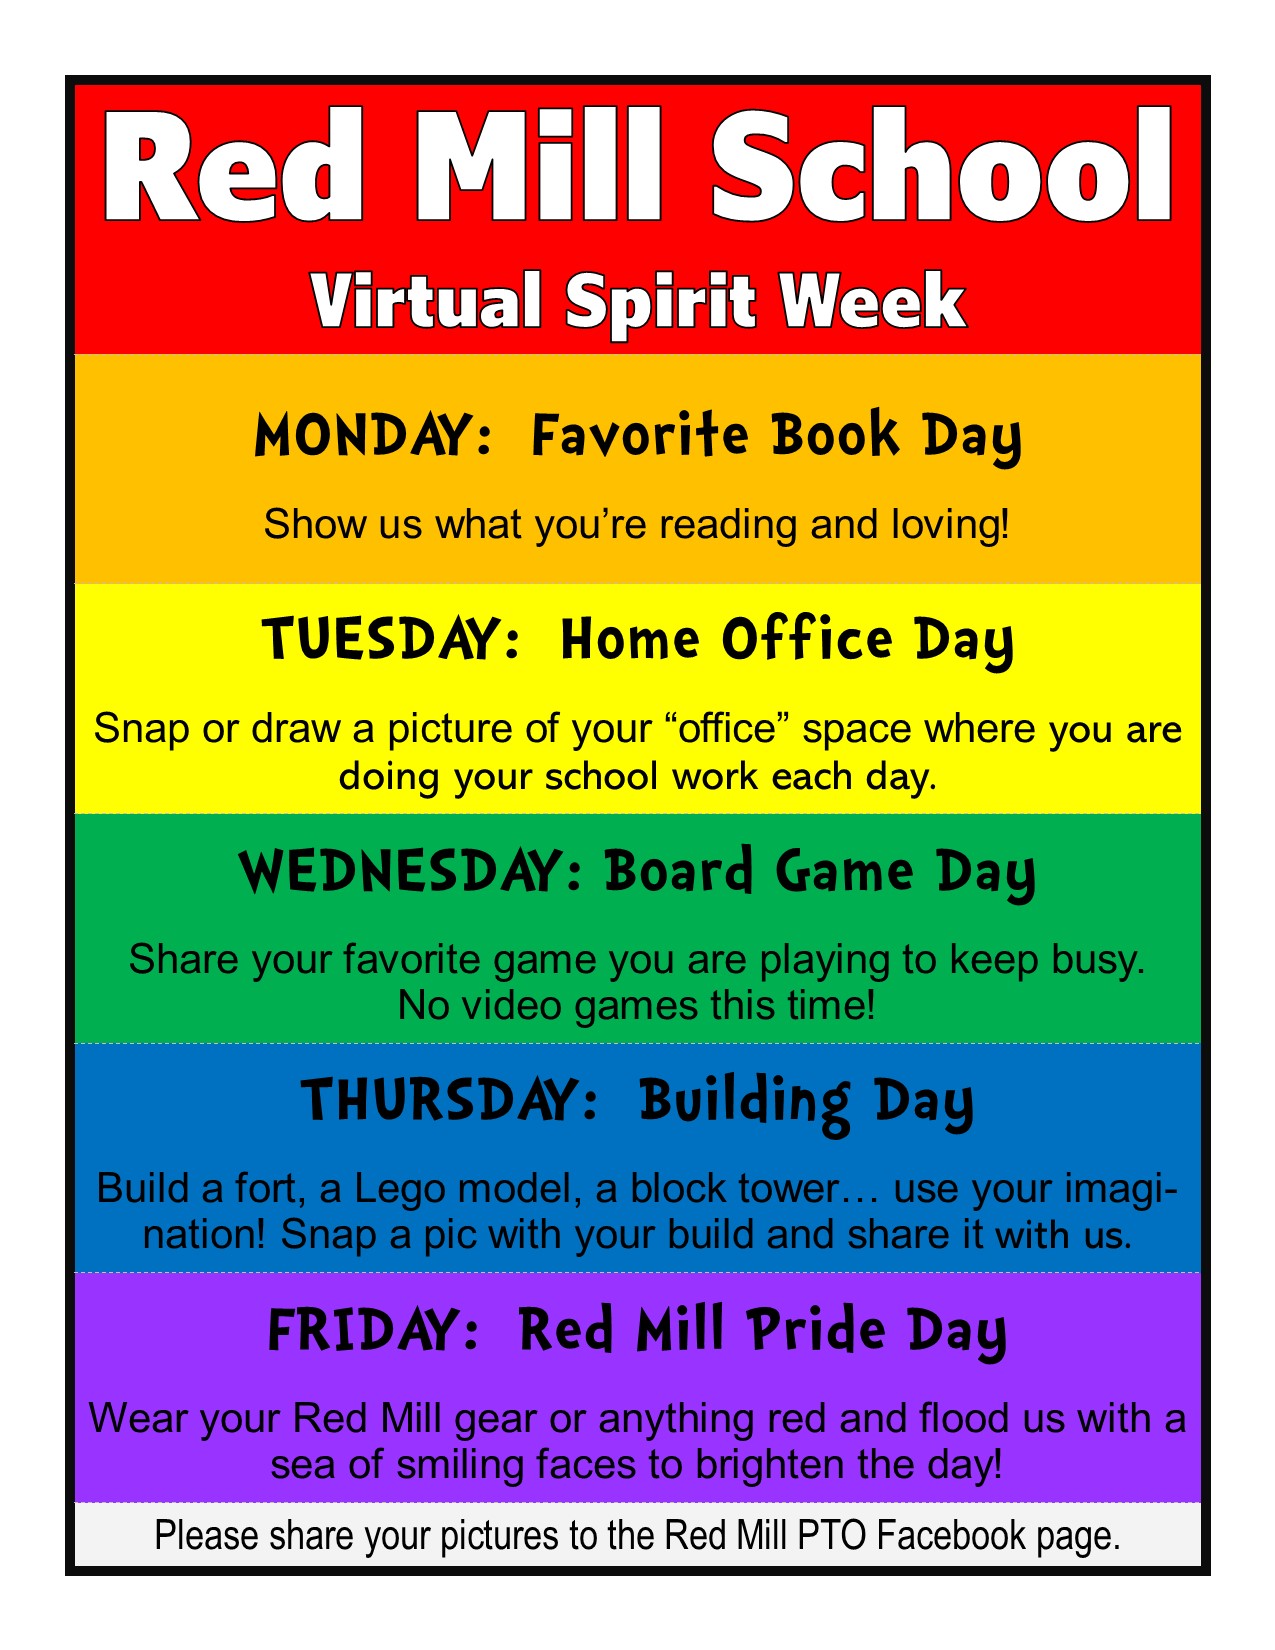 Red Mill Virtual Spirit Week schedule